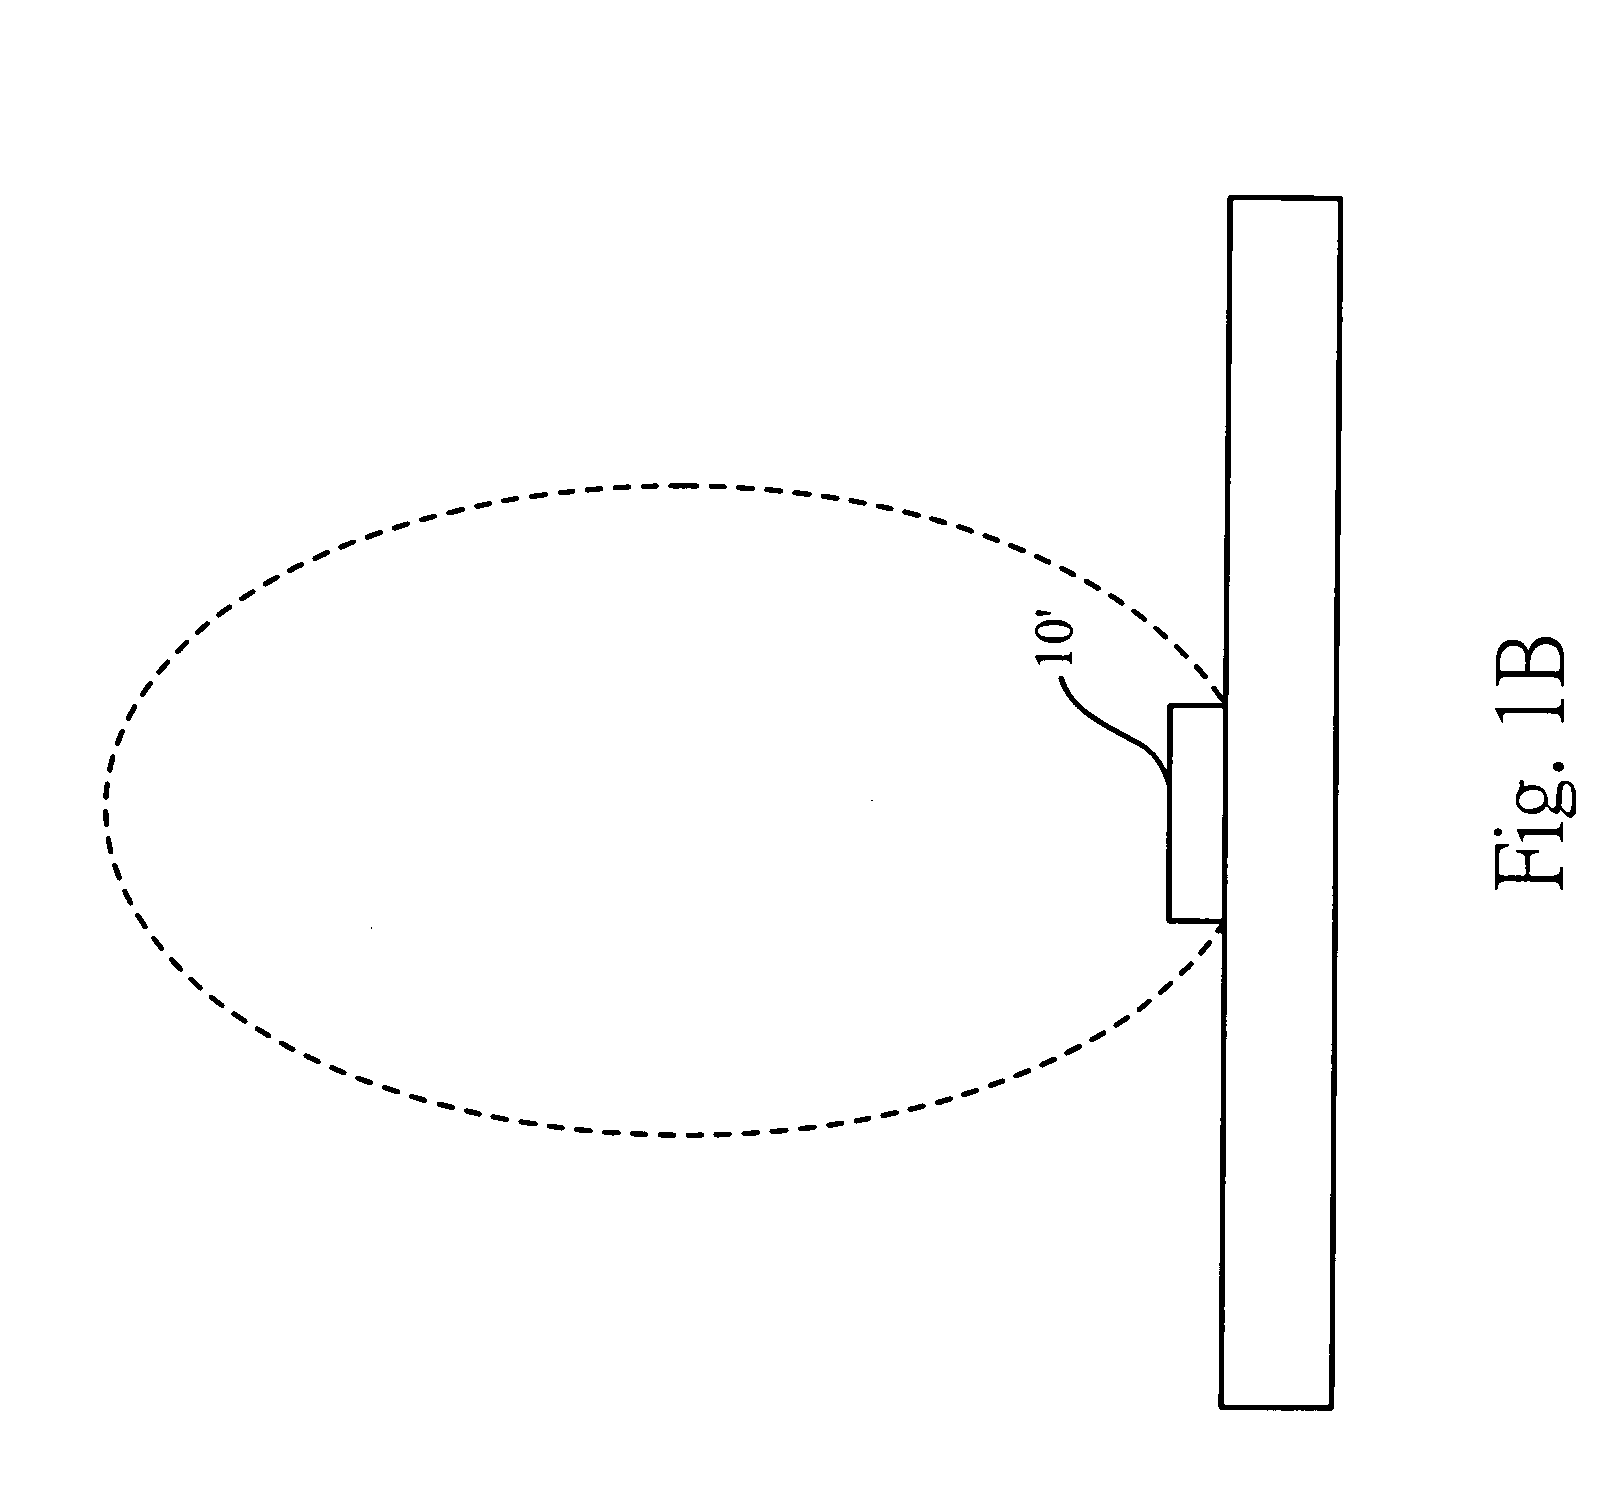 Light emitting diode with larger illumination area